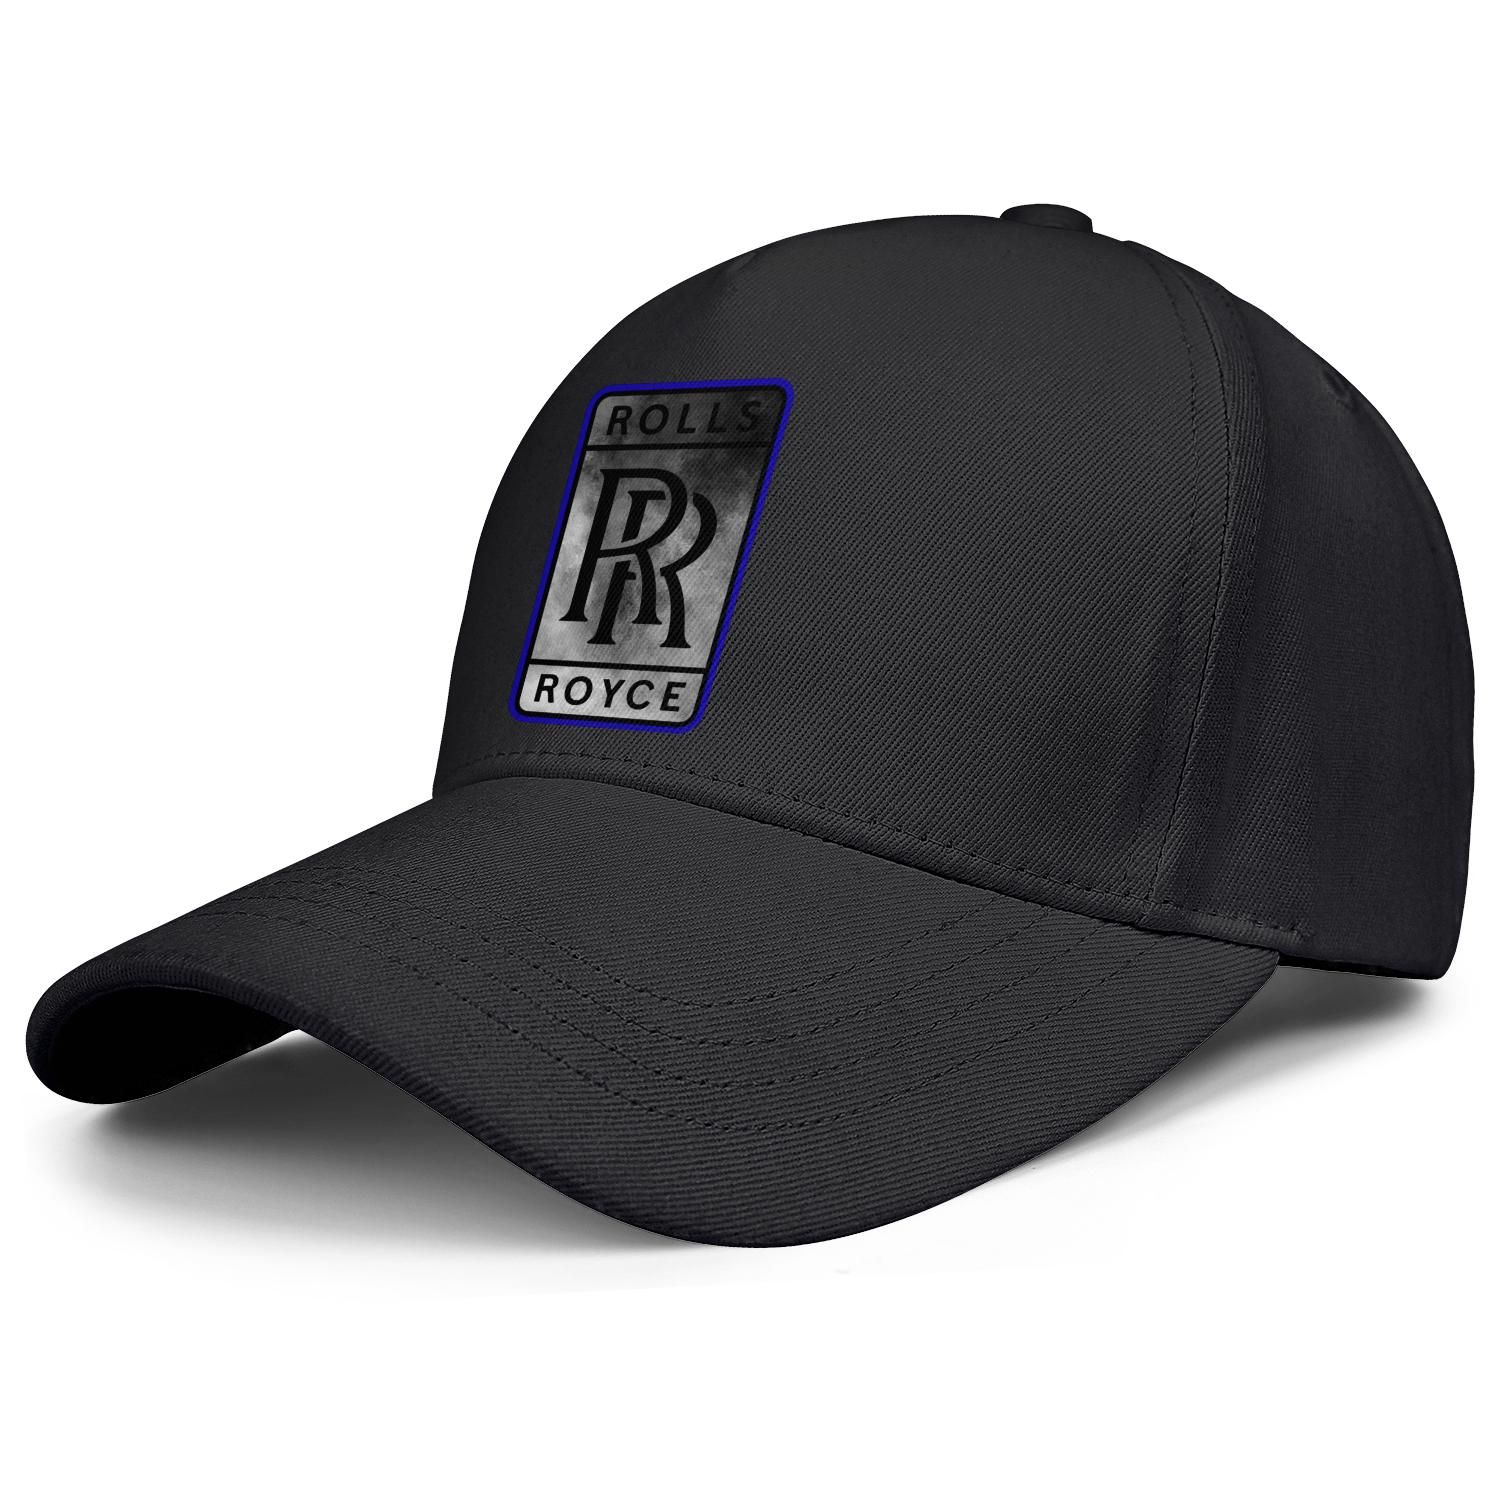 Rolls Royce Moto Car Unisex Adjustable Snapback Baseball Caps Hats